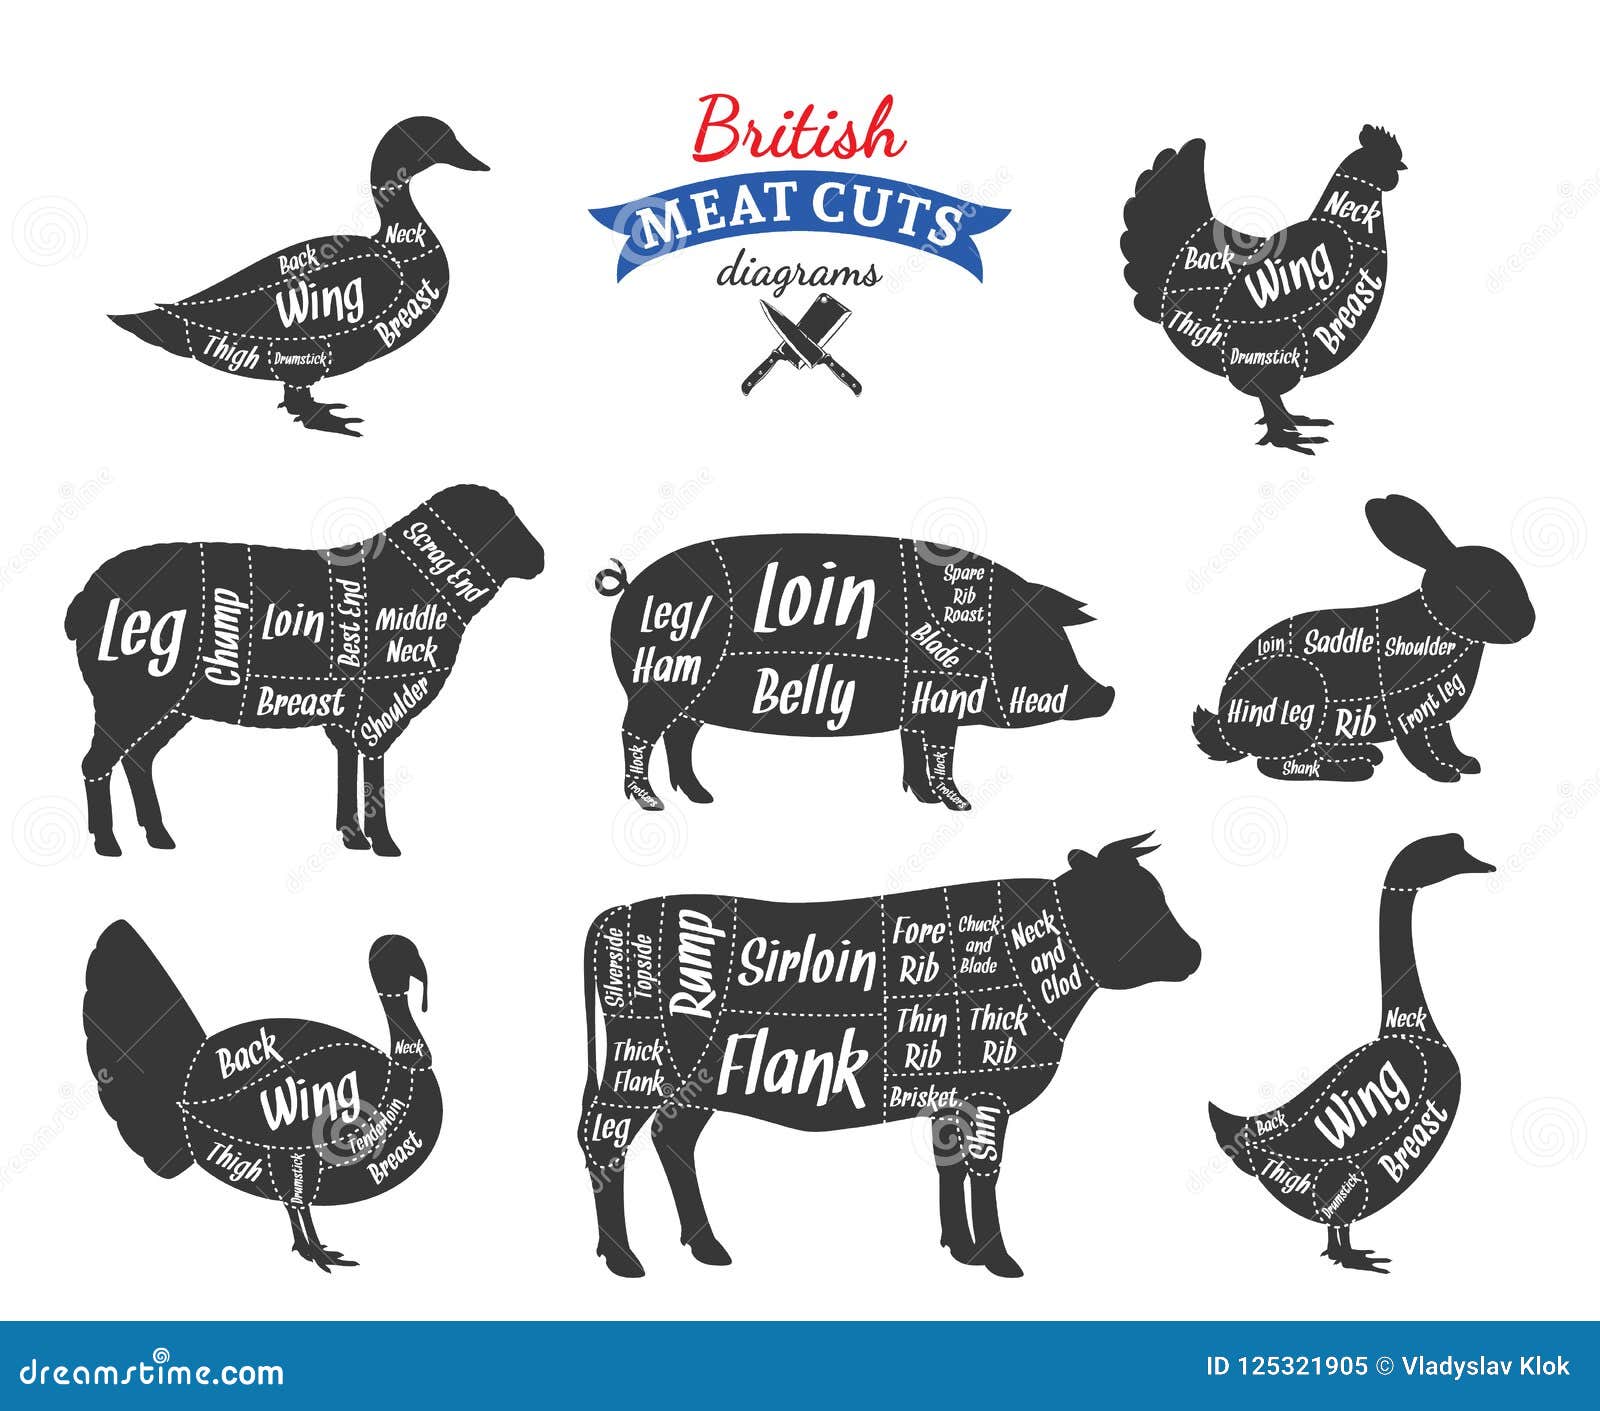  british meat cuts diagrams